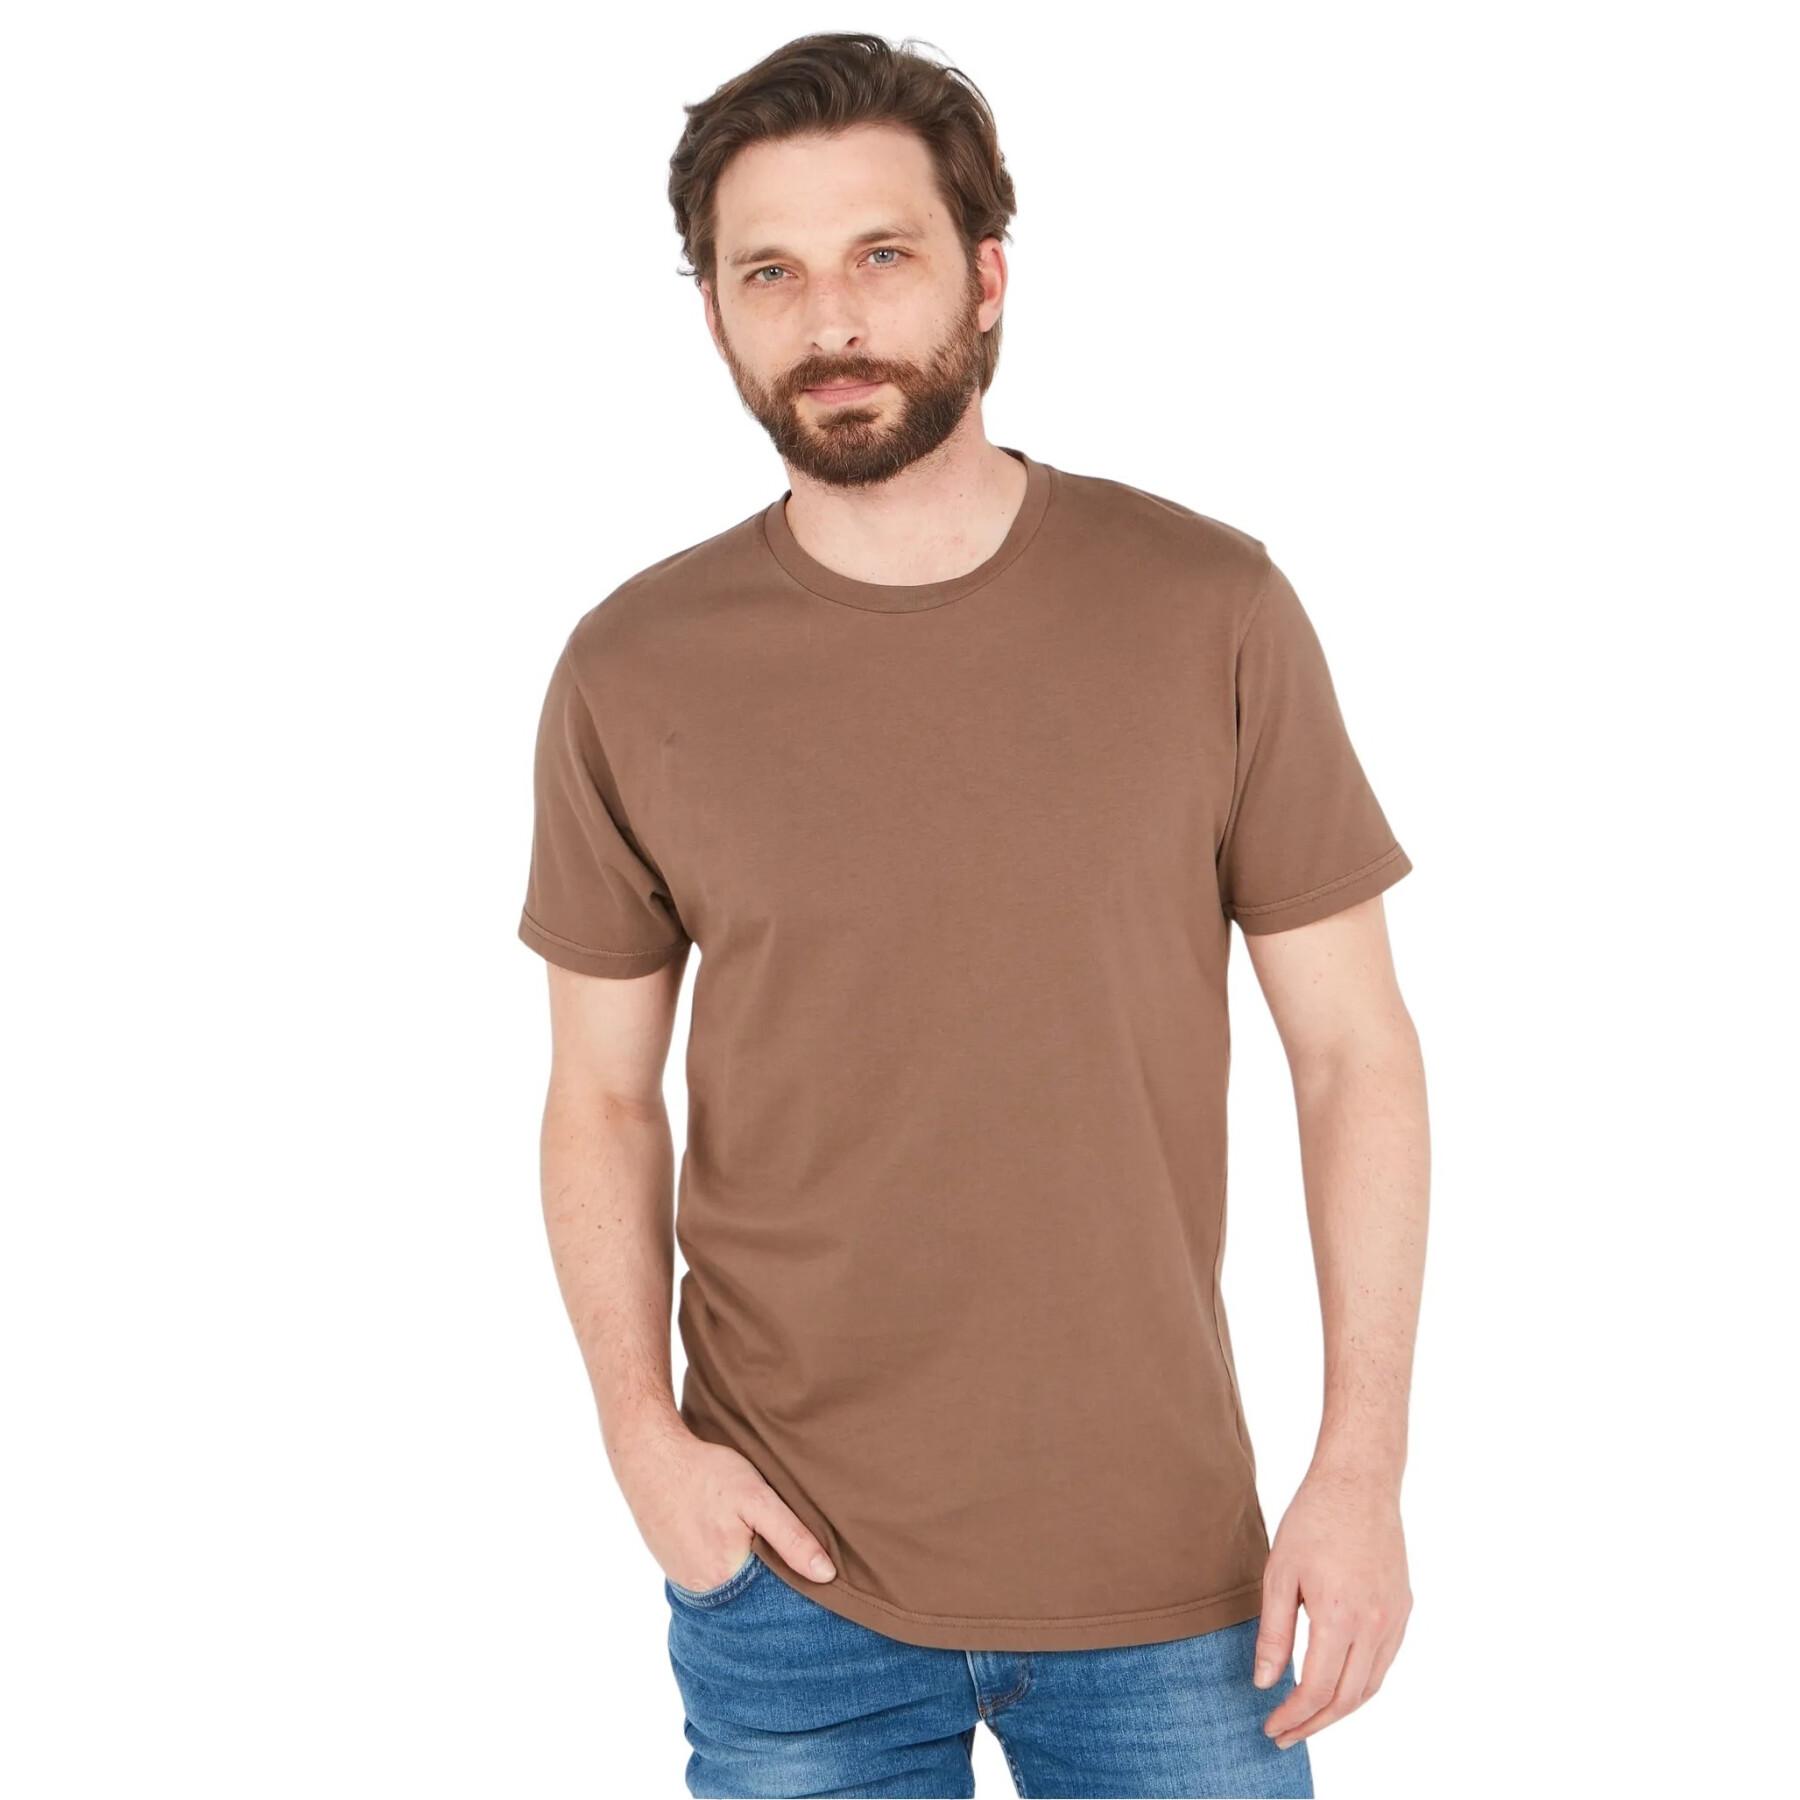 Camiseta Colorful Standard Classic Organic cedar brown